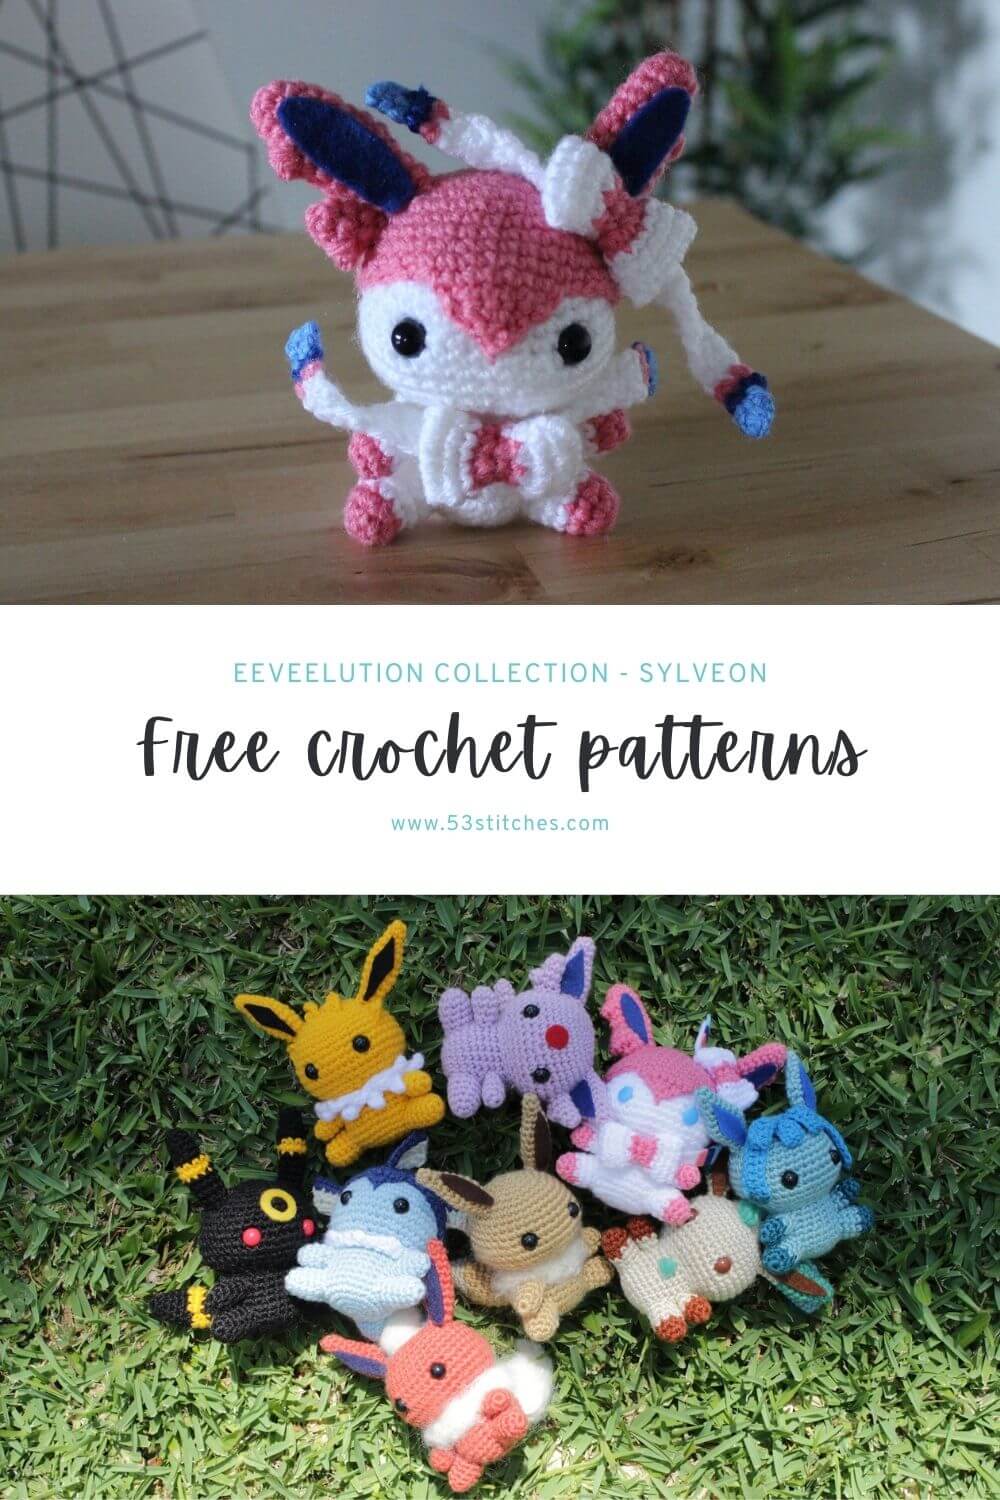 Sylveon crochet pattern free